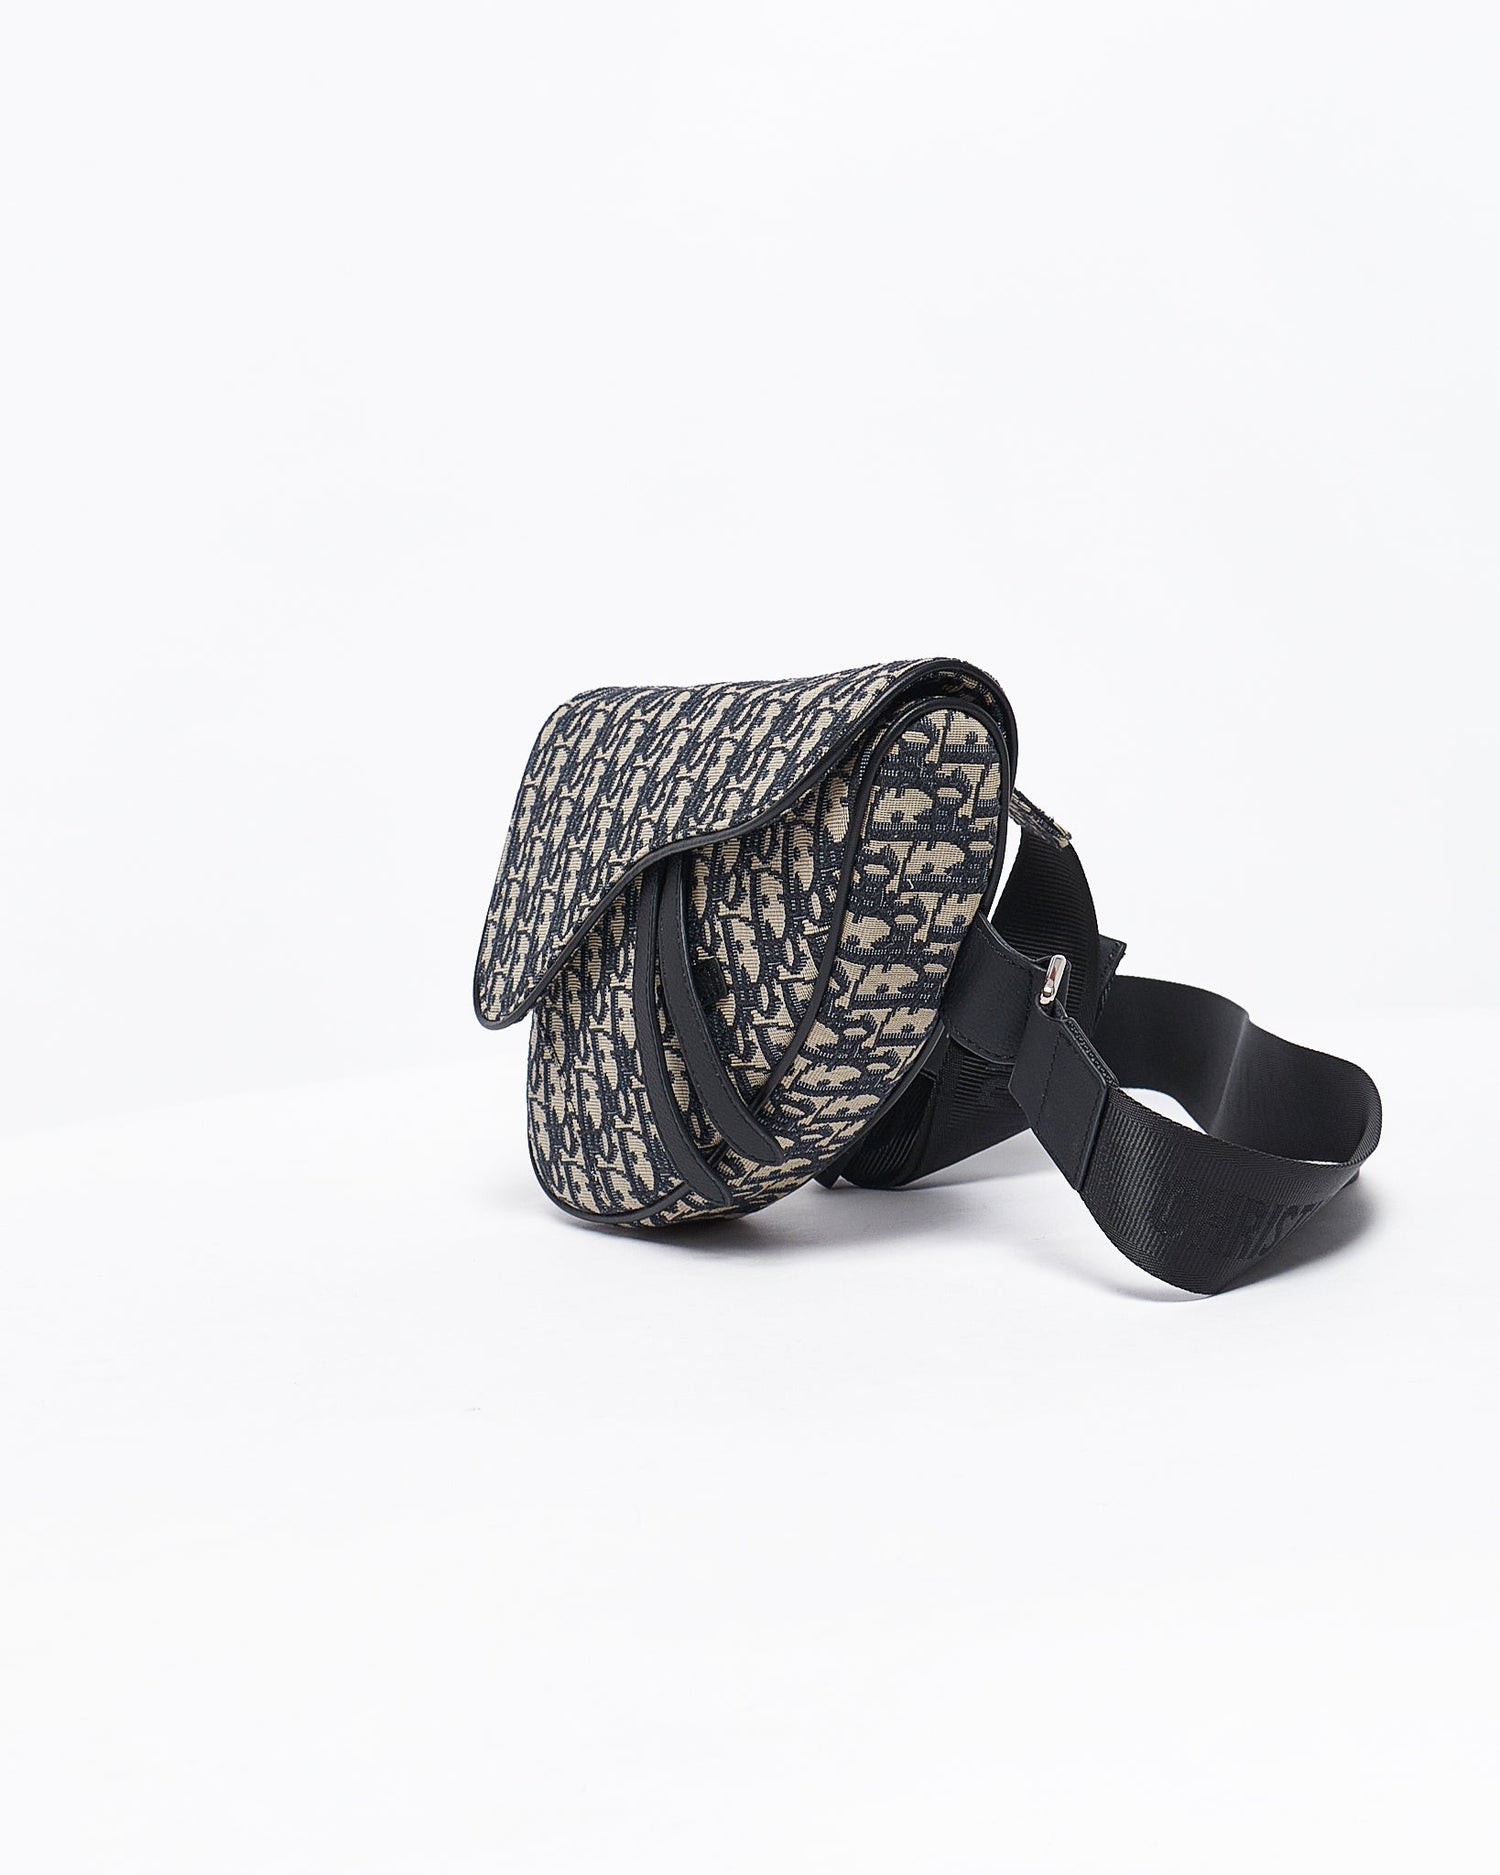 MOI OUTFIT-Dior Saddle Bag 84.90